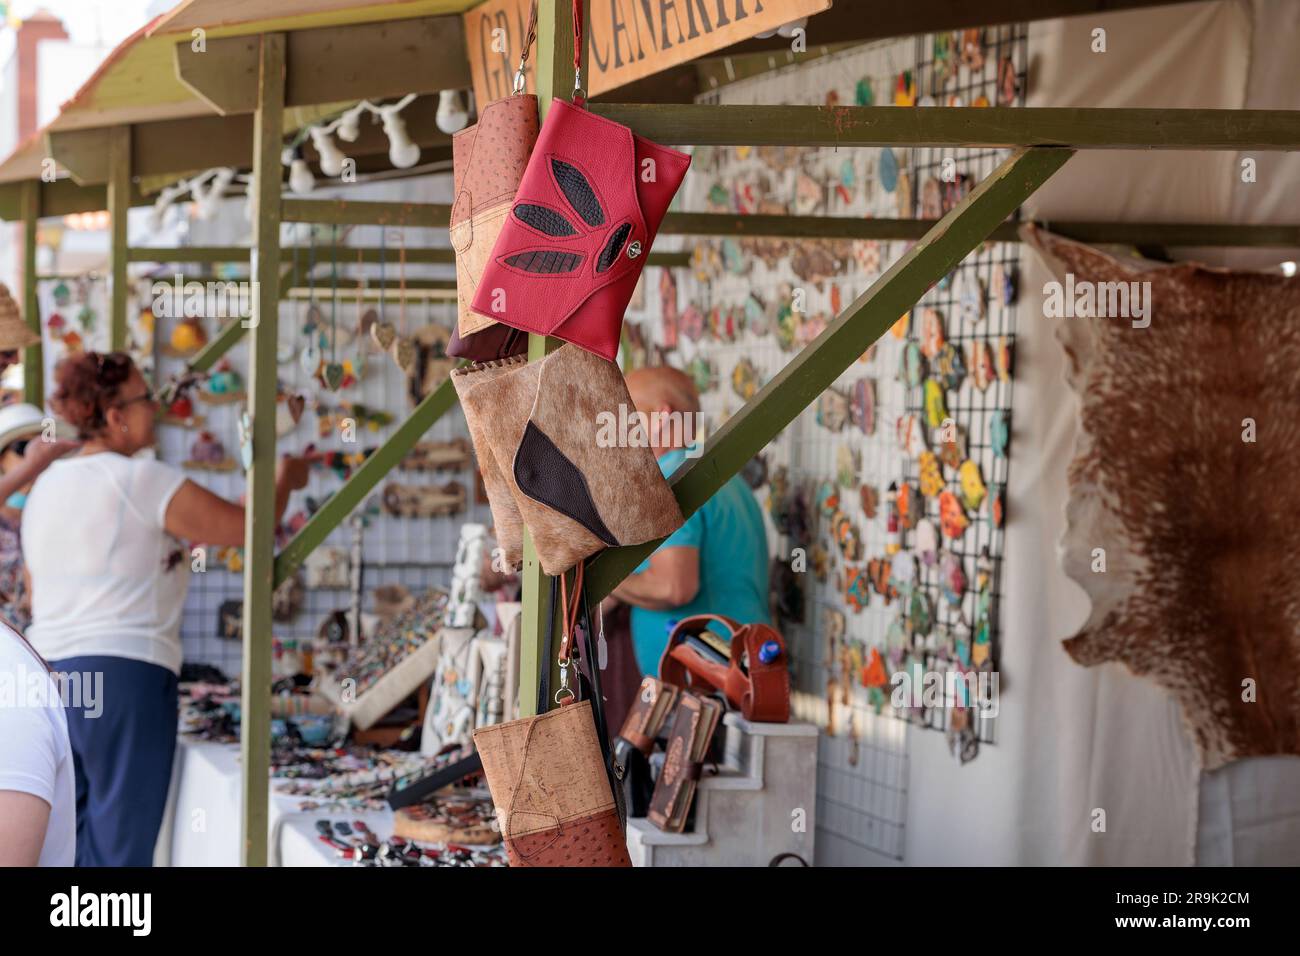 Annual Feria de Artesania (Craft Fair) at Antigua Fuerteventura Canary Islands Spain Stock Photo